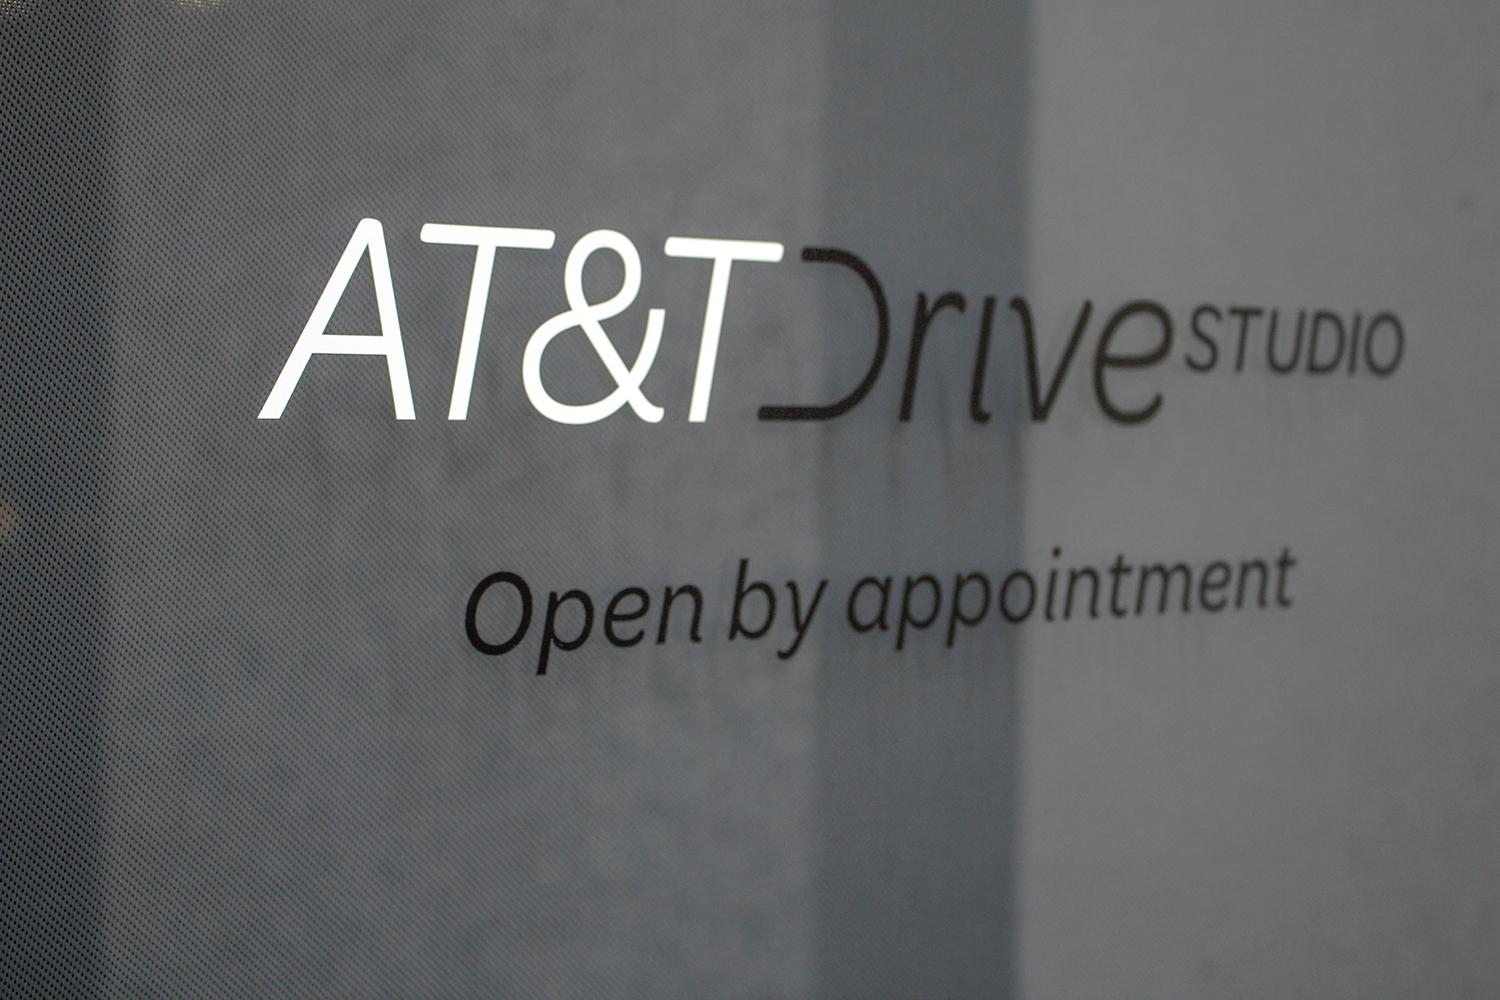 AT&T Drive Studio